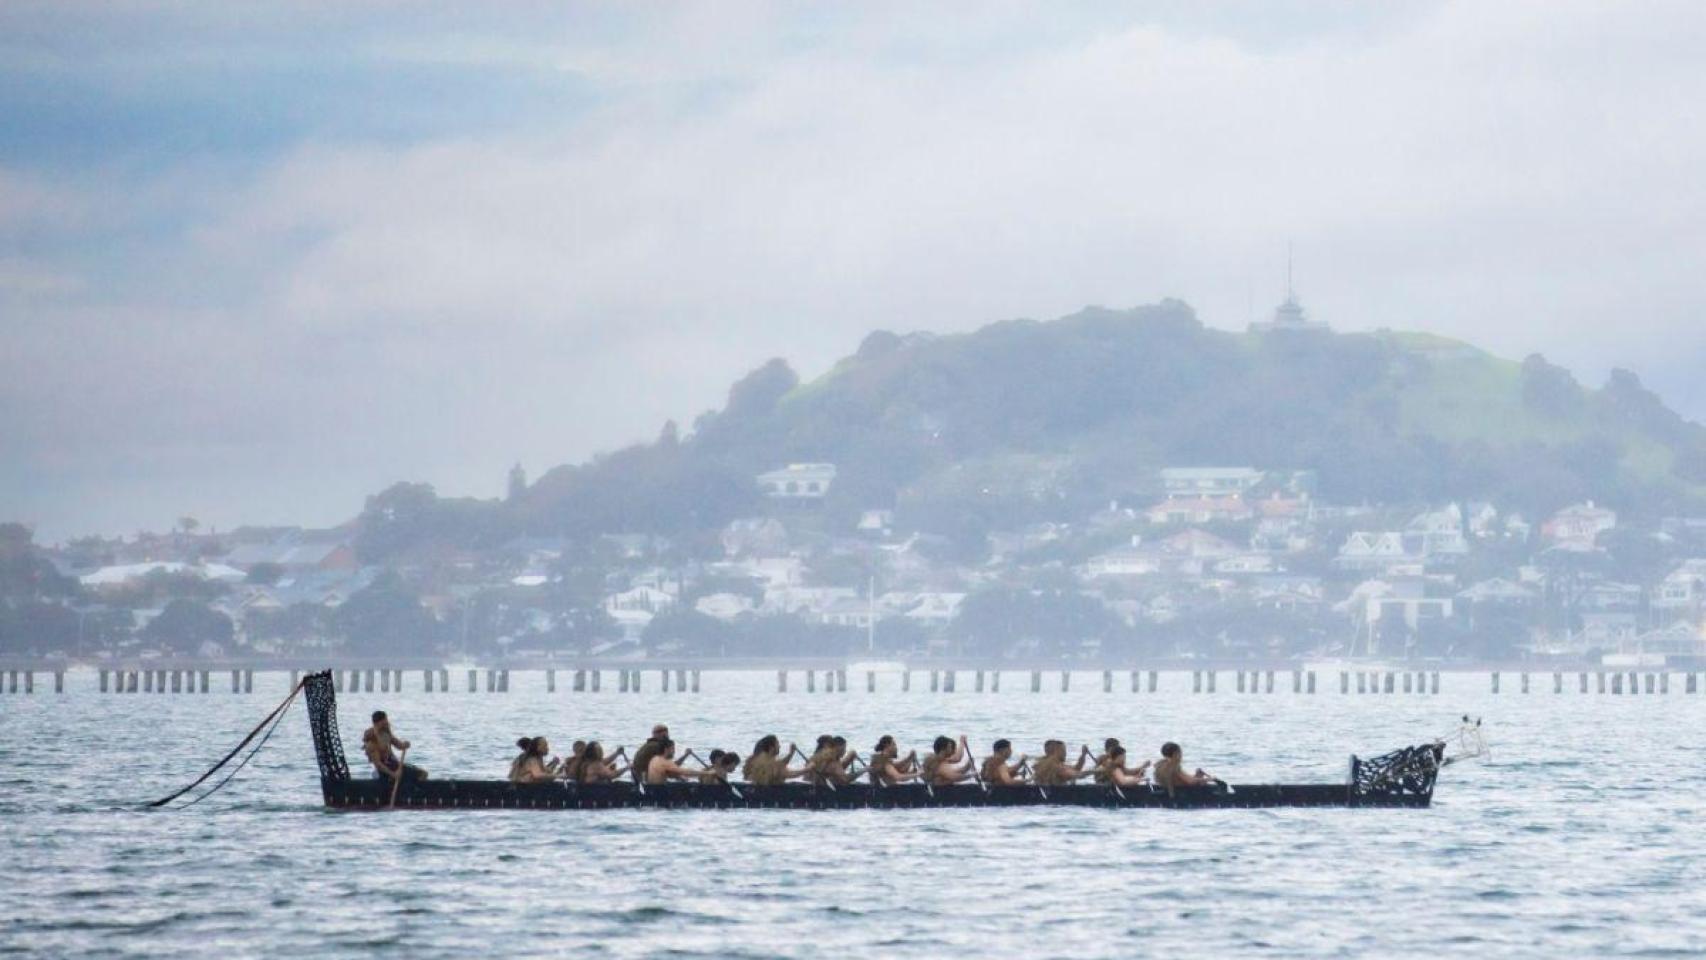 La canoa 'Te Kawau' que 'escoltará' a Emirates team New Zealand durante la Copa América de vela